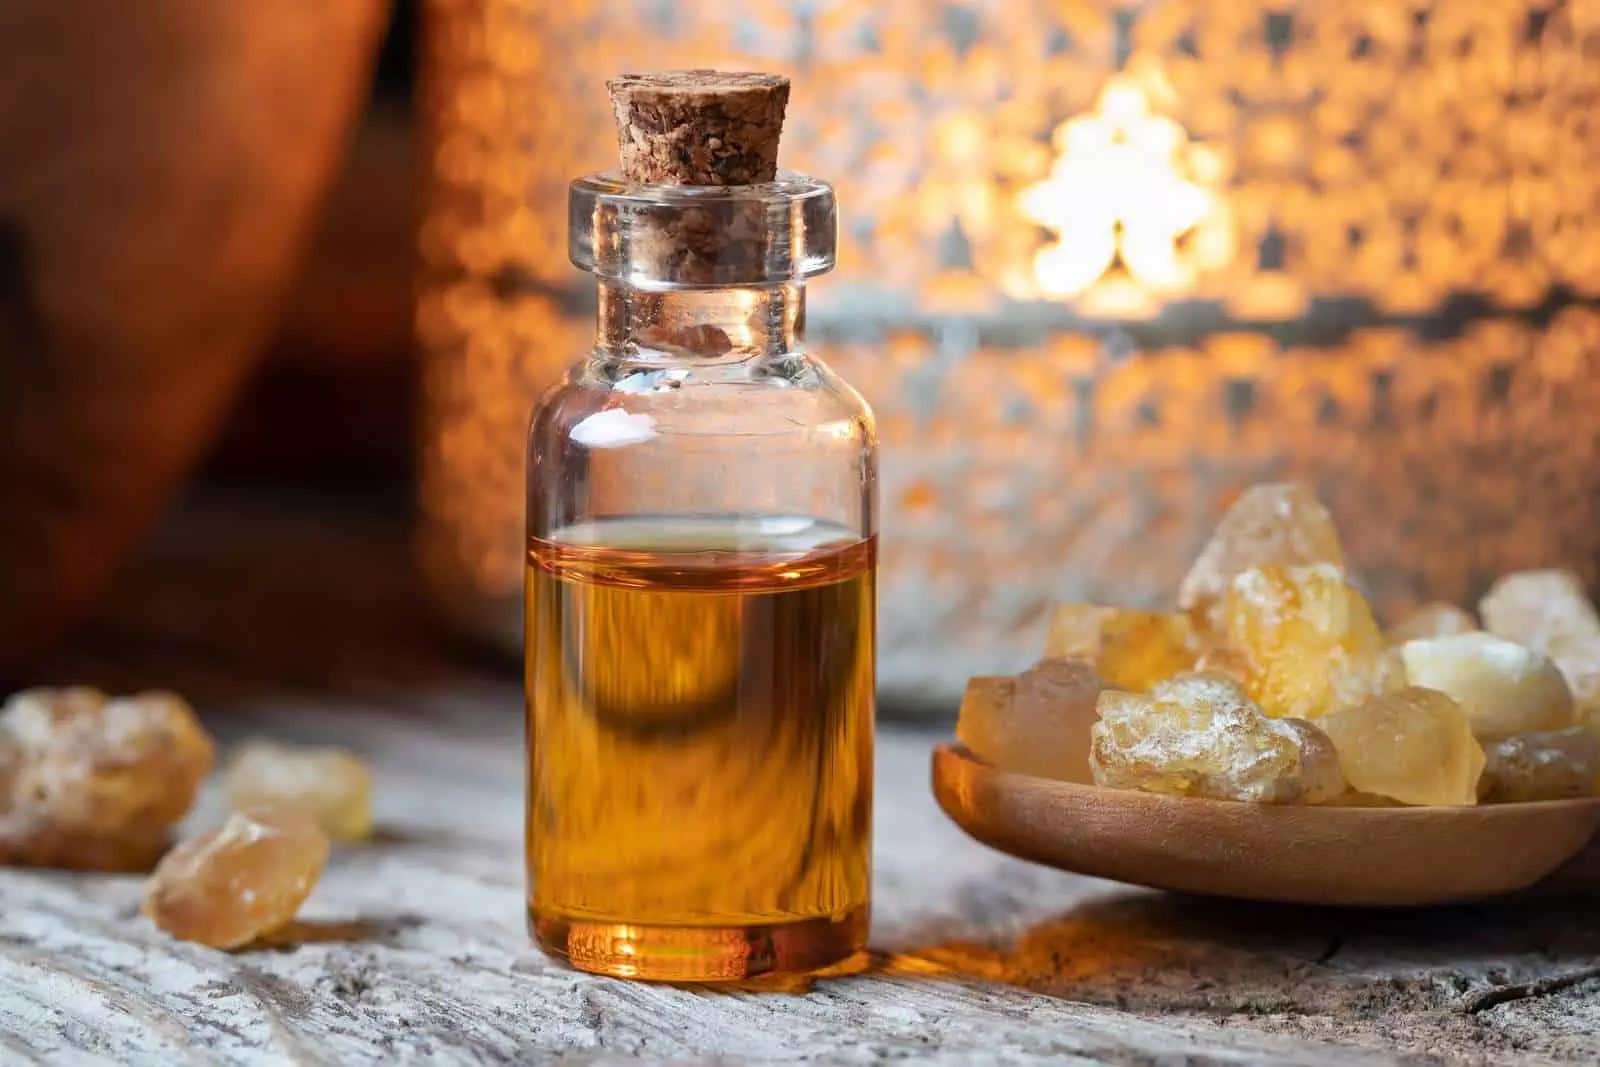 Frankincense essential oil